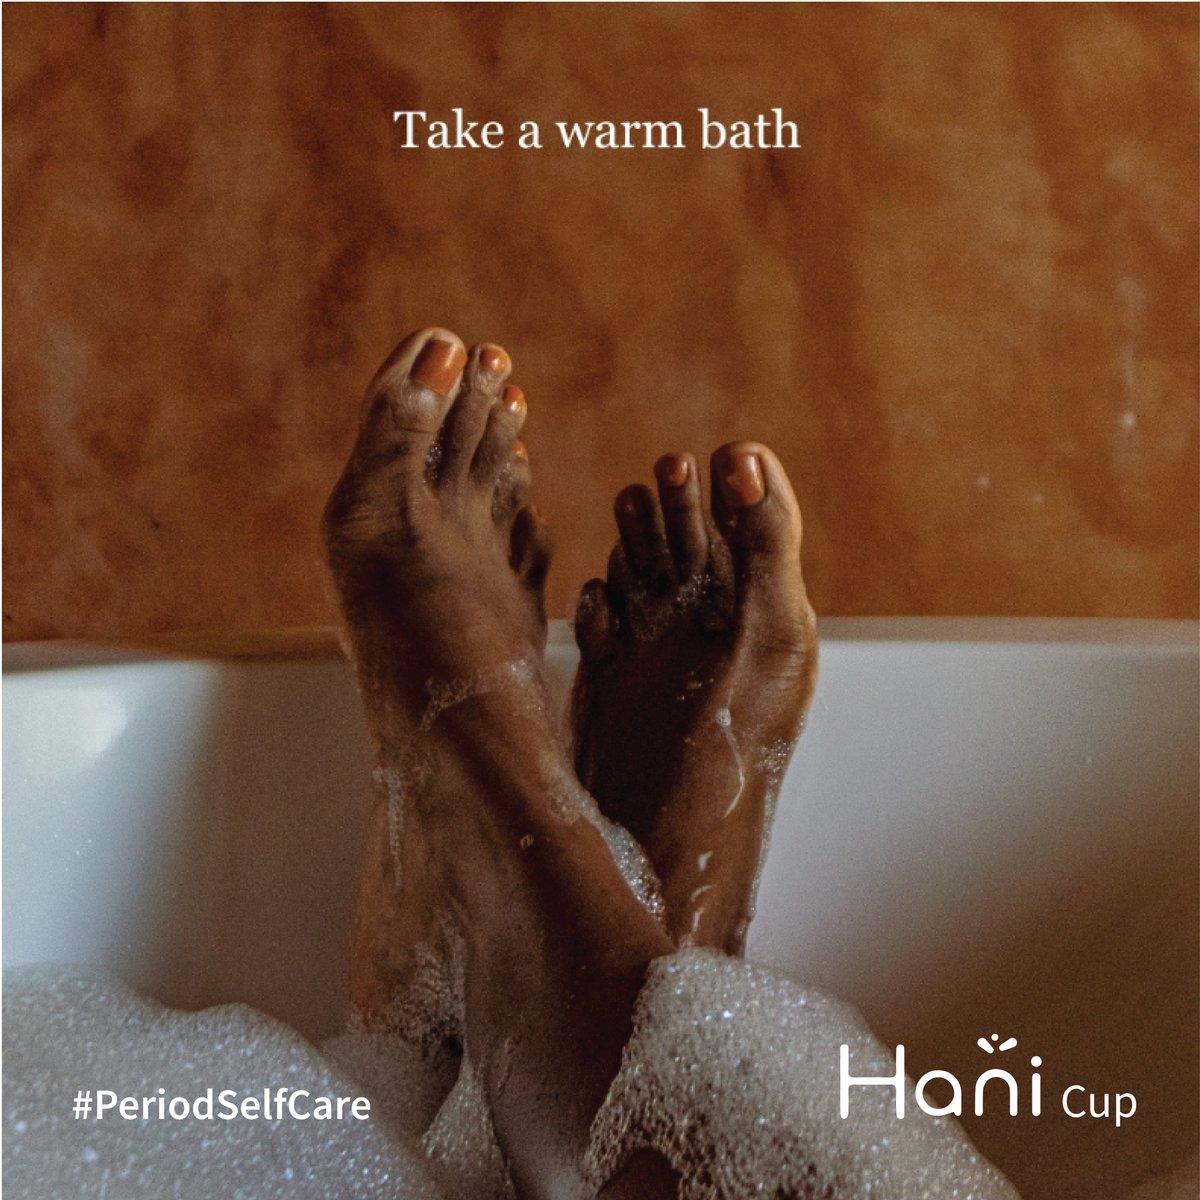 Period self care 💖

#MenstrualHealth #Kenya #HaniCup #PeriodFreedom #ALifeChangingGift